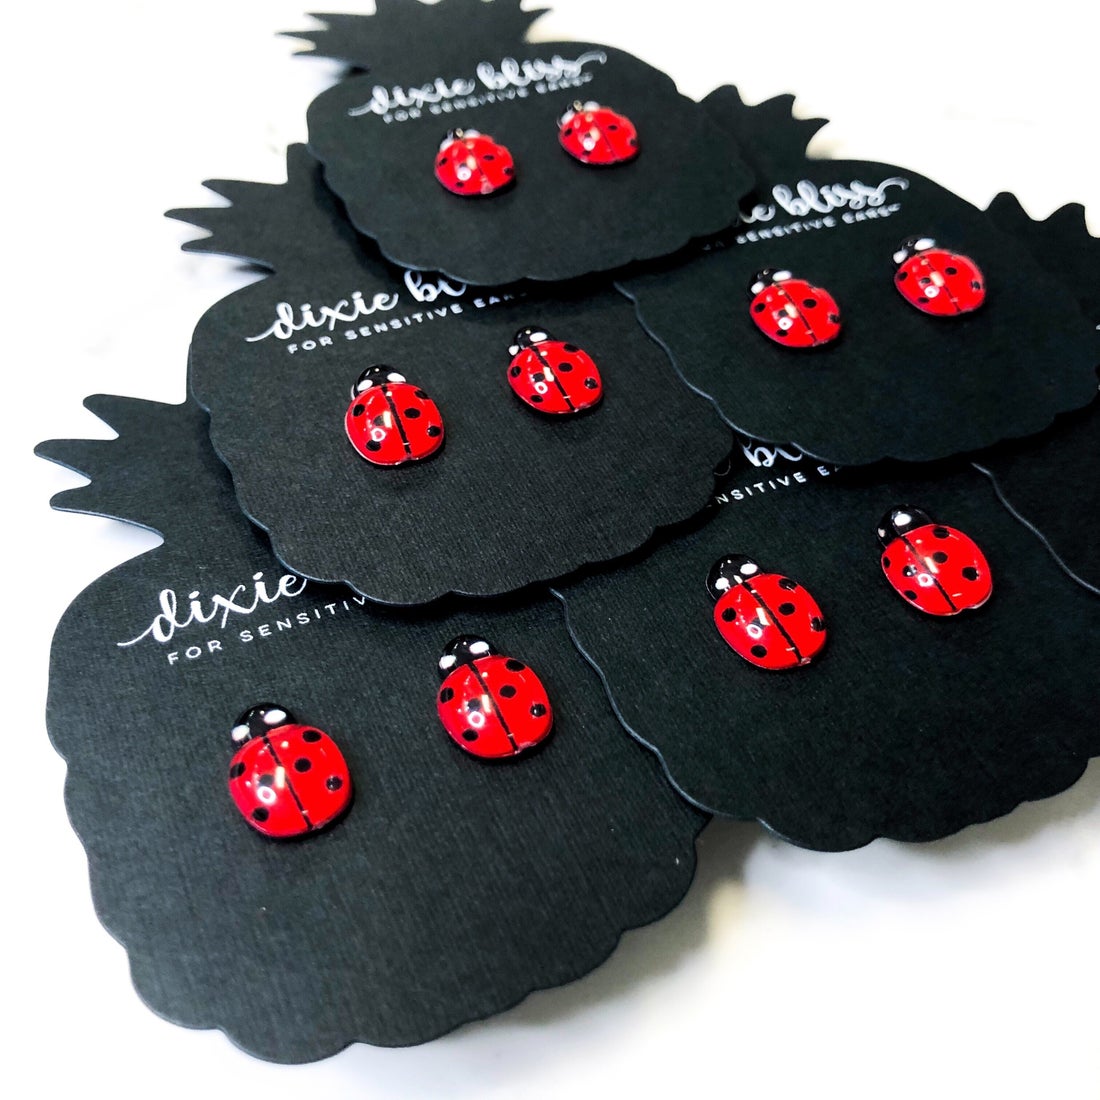 Dixie Bliss Earrings: Ladybugs